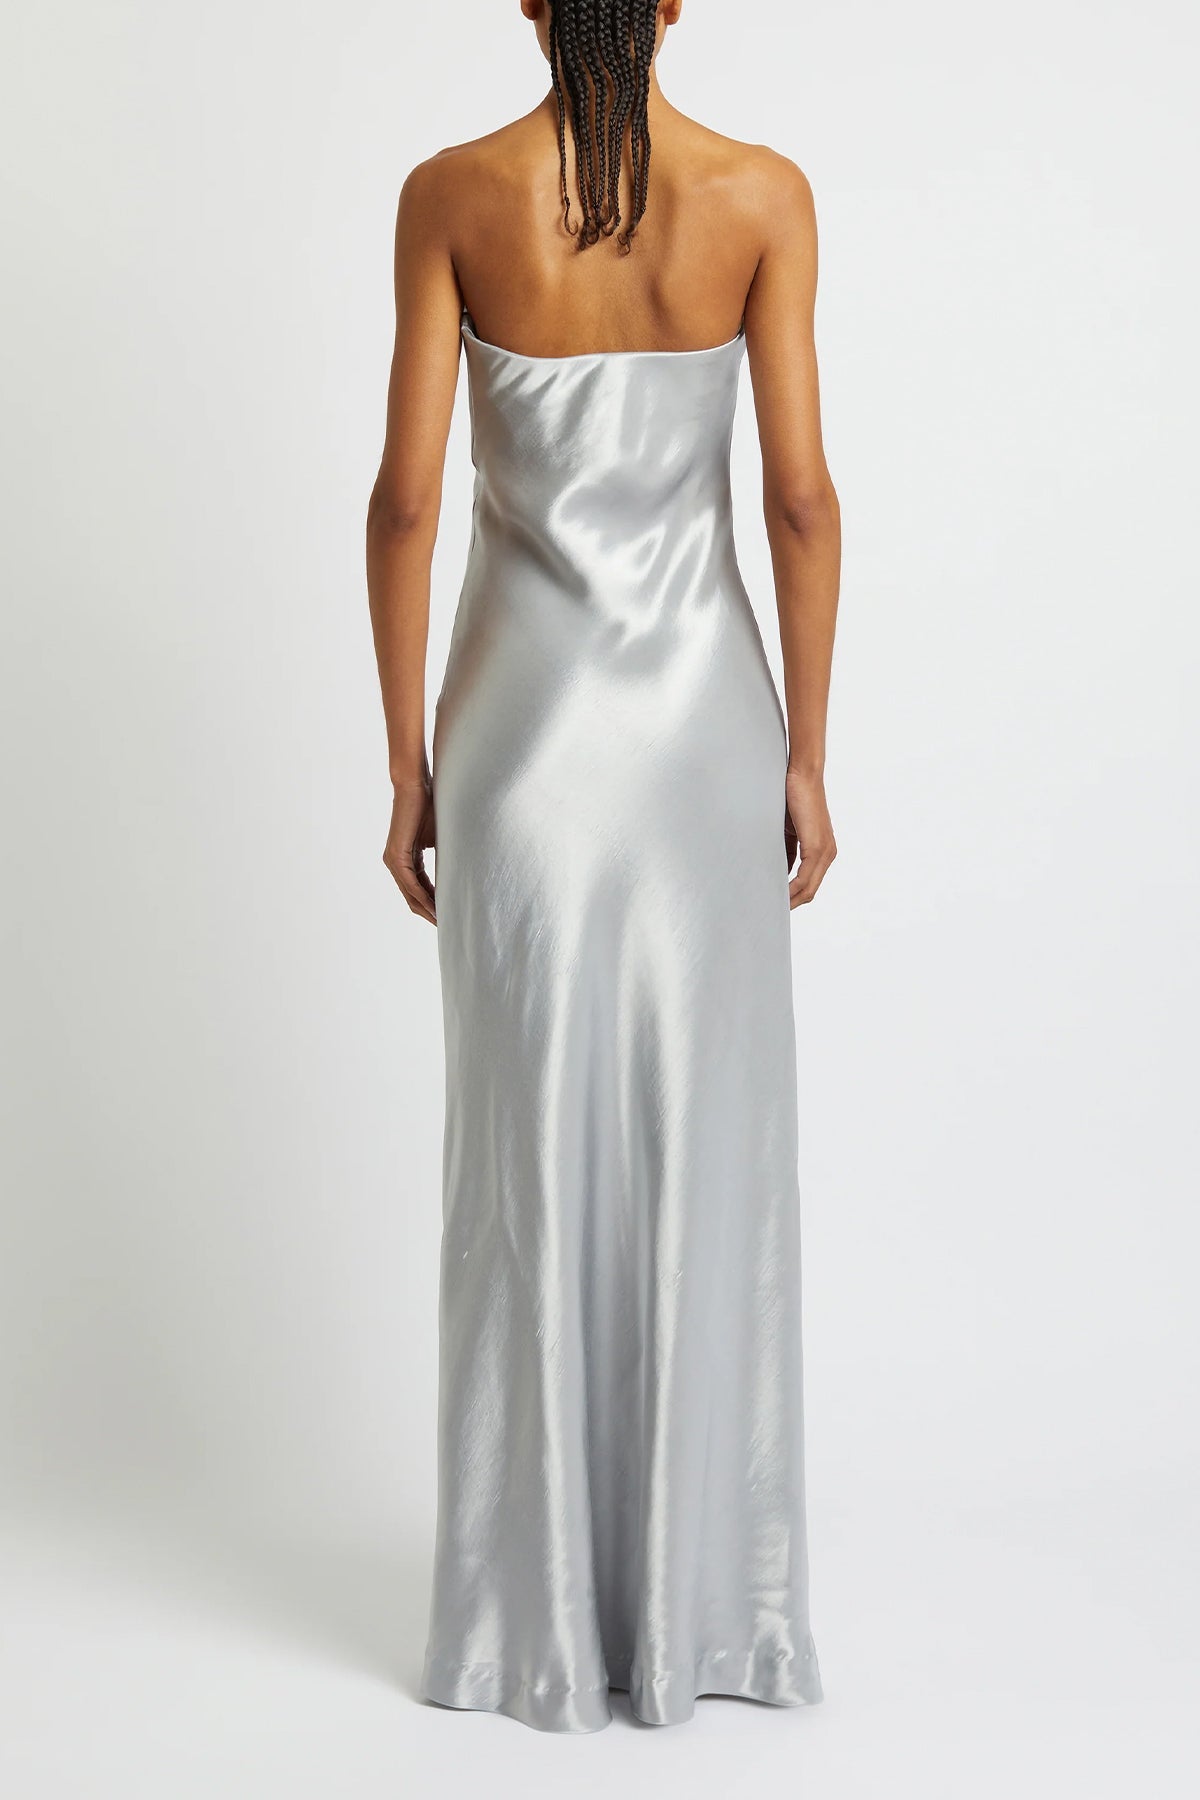 Palladium Strapless Dress in Silver - shop-olivia.com